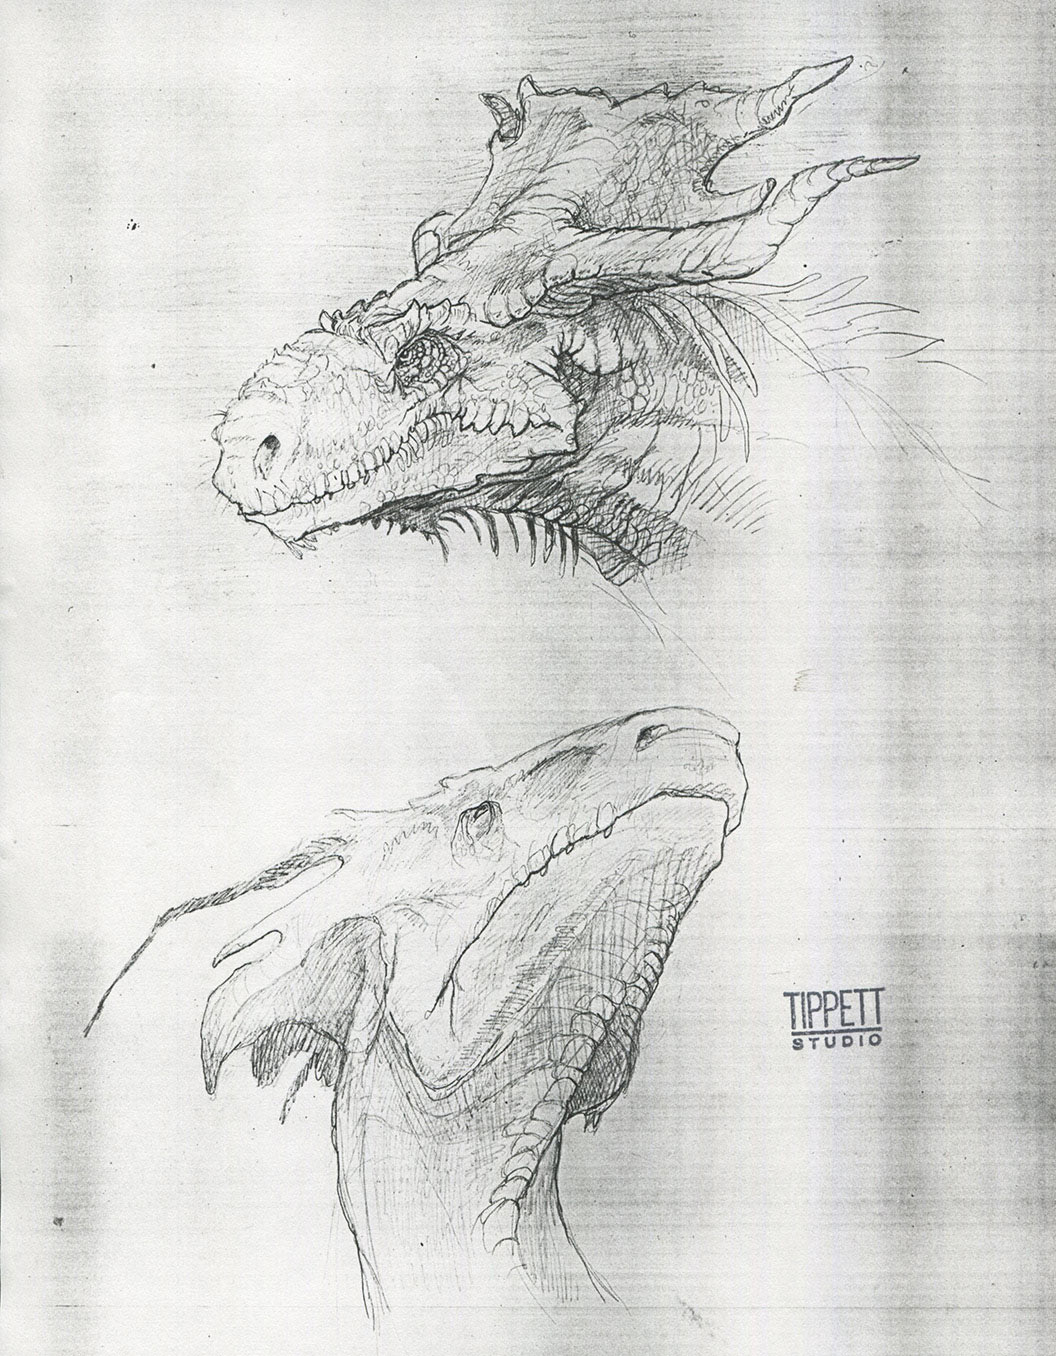 Some of Tippett Studio’s original designs for Draco.